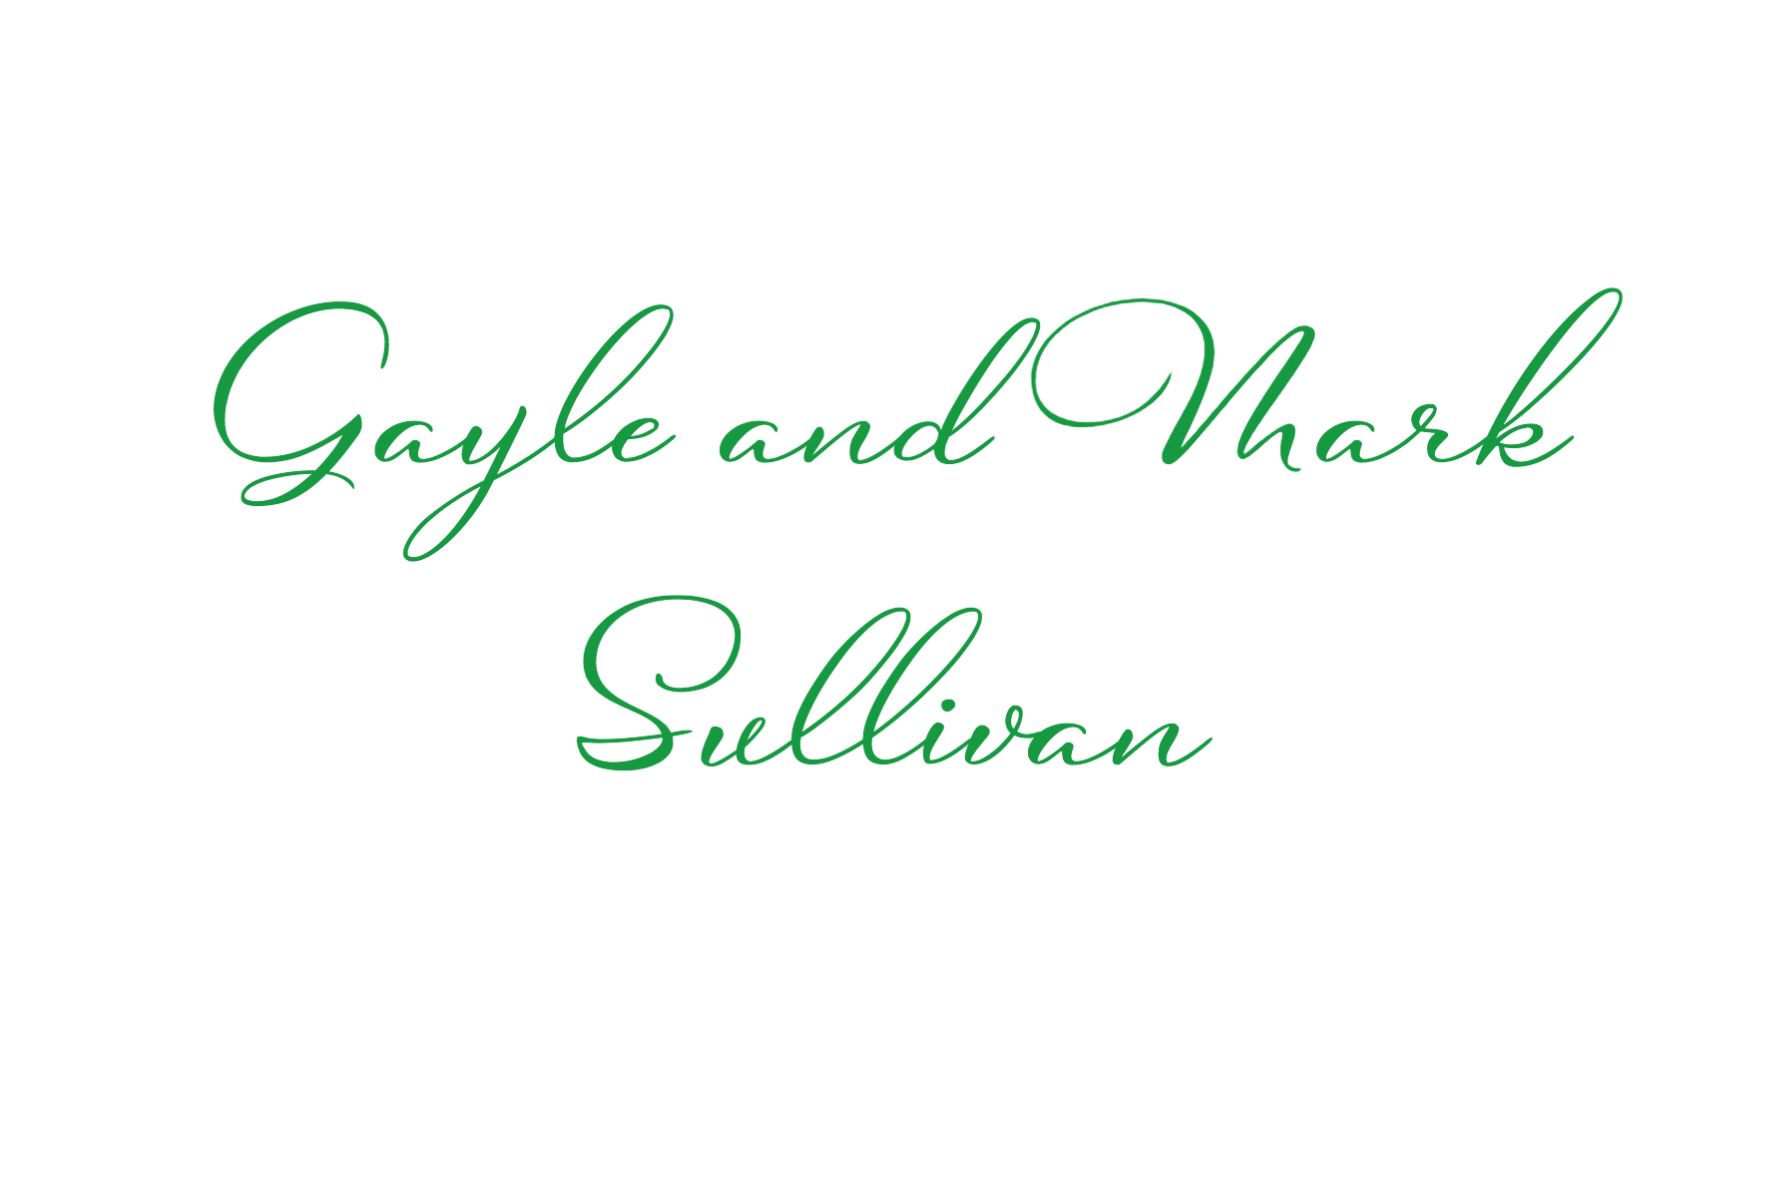 OIC_Gayle and Mark Sullivan_logo